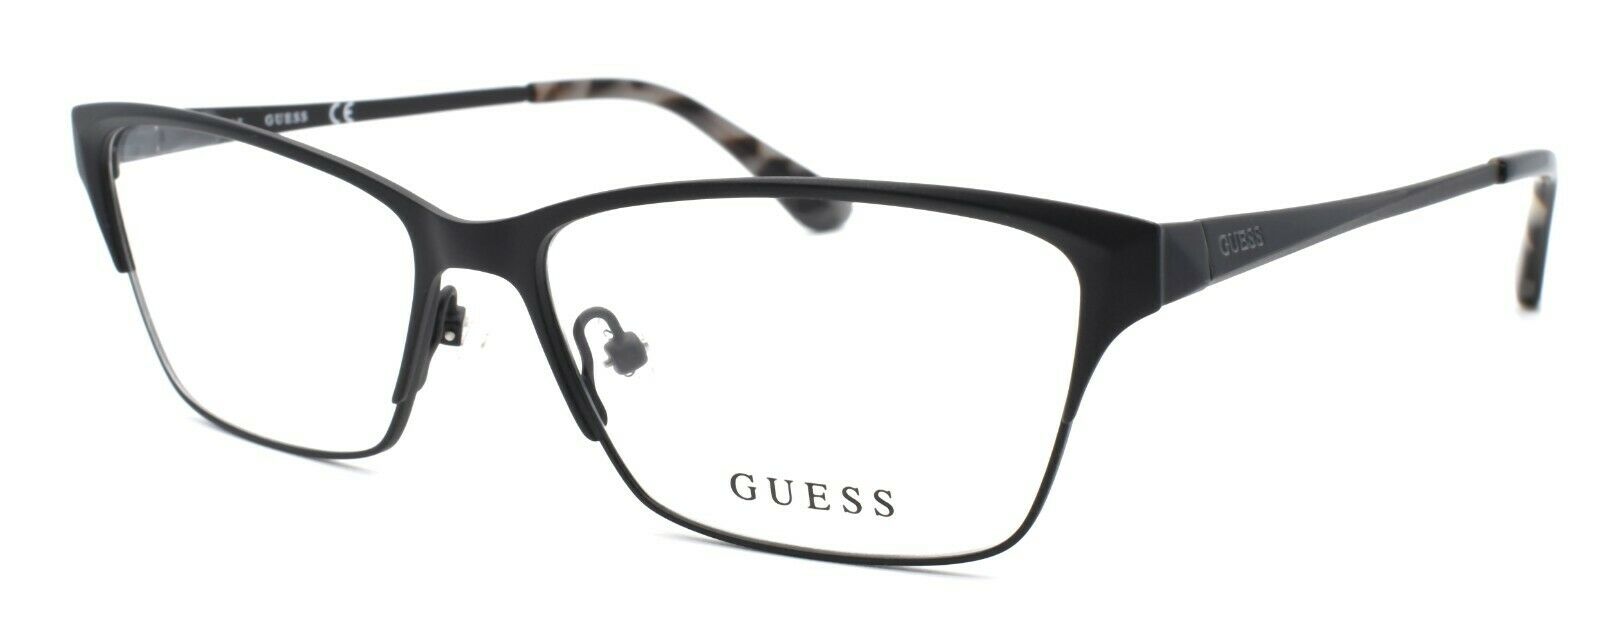 1-GUESS GU2605 082 Women's Eyeglasses Frames 53-14-135 Matte Black + CASE-664689877027-IKSpecs